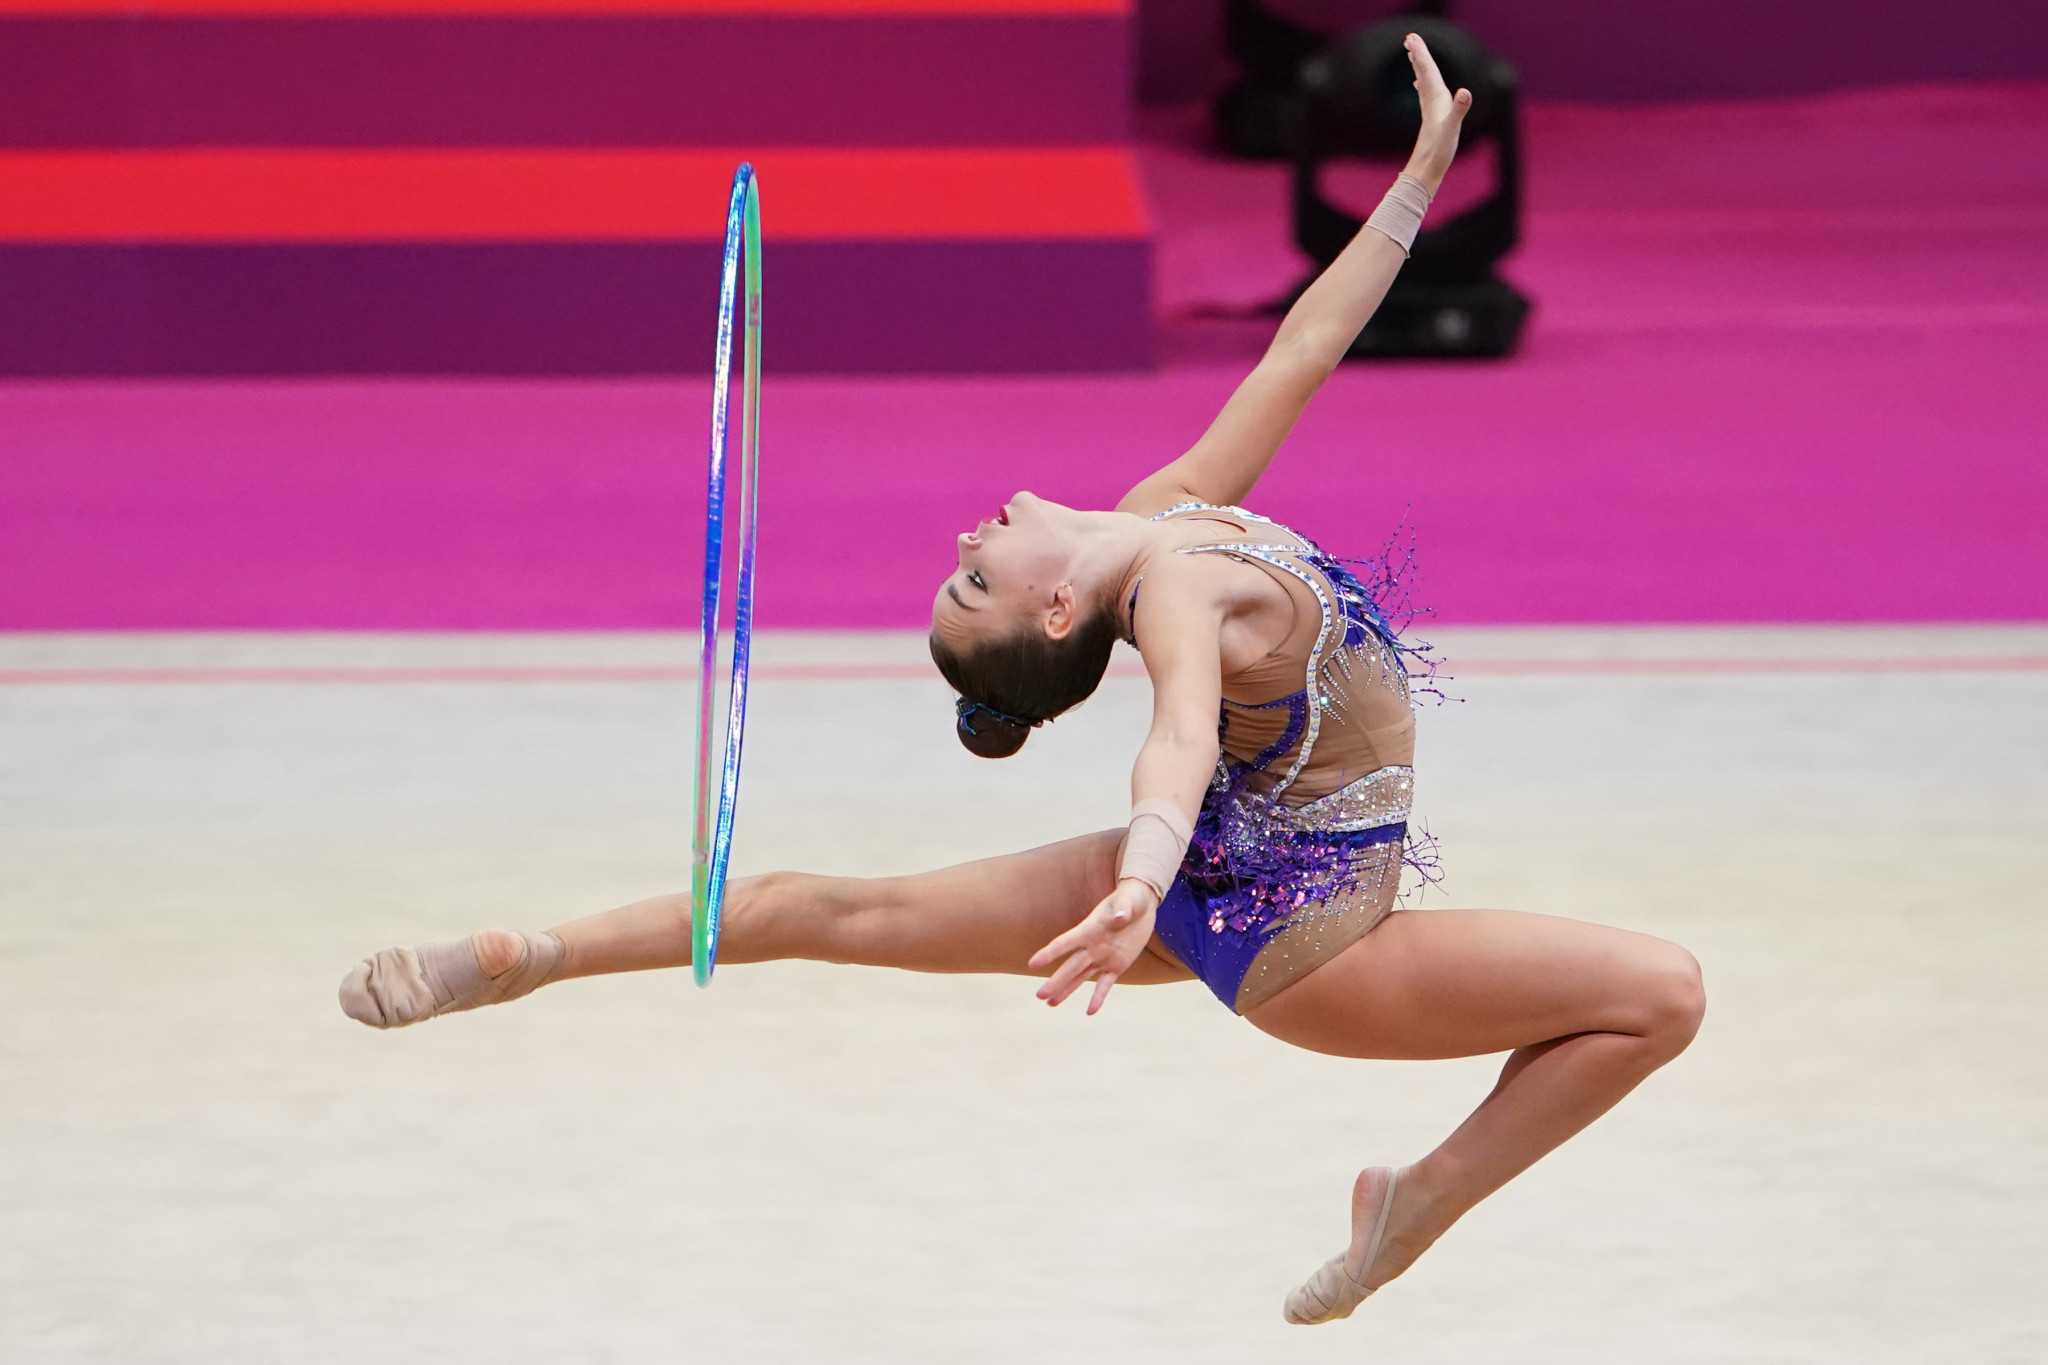 Averina makes history at Rhythmic Gymnastics World Championships in Kitakyushu